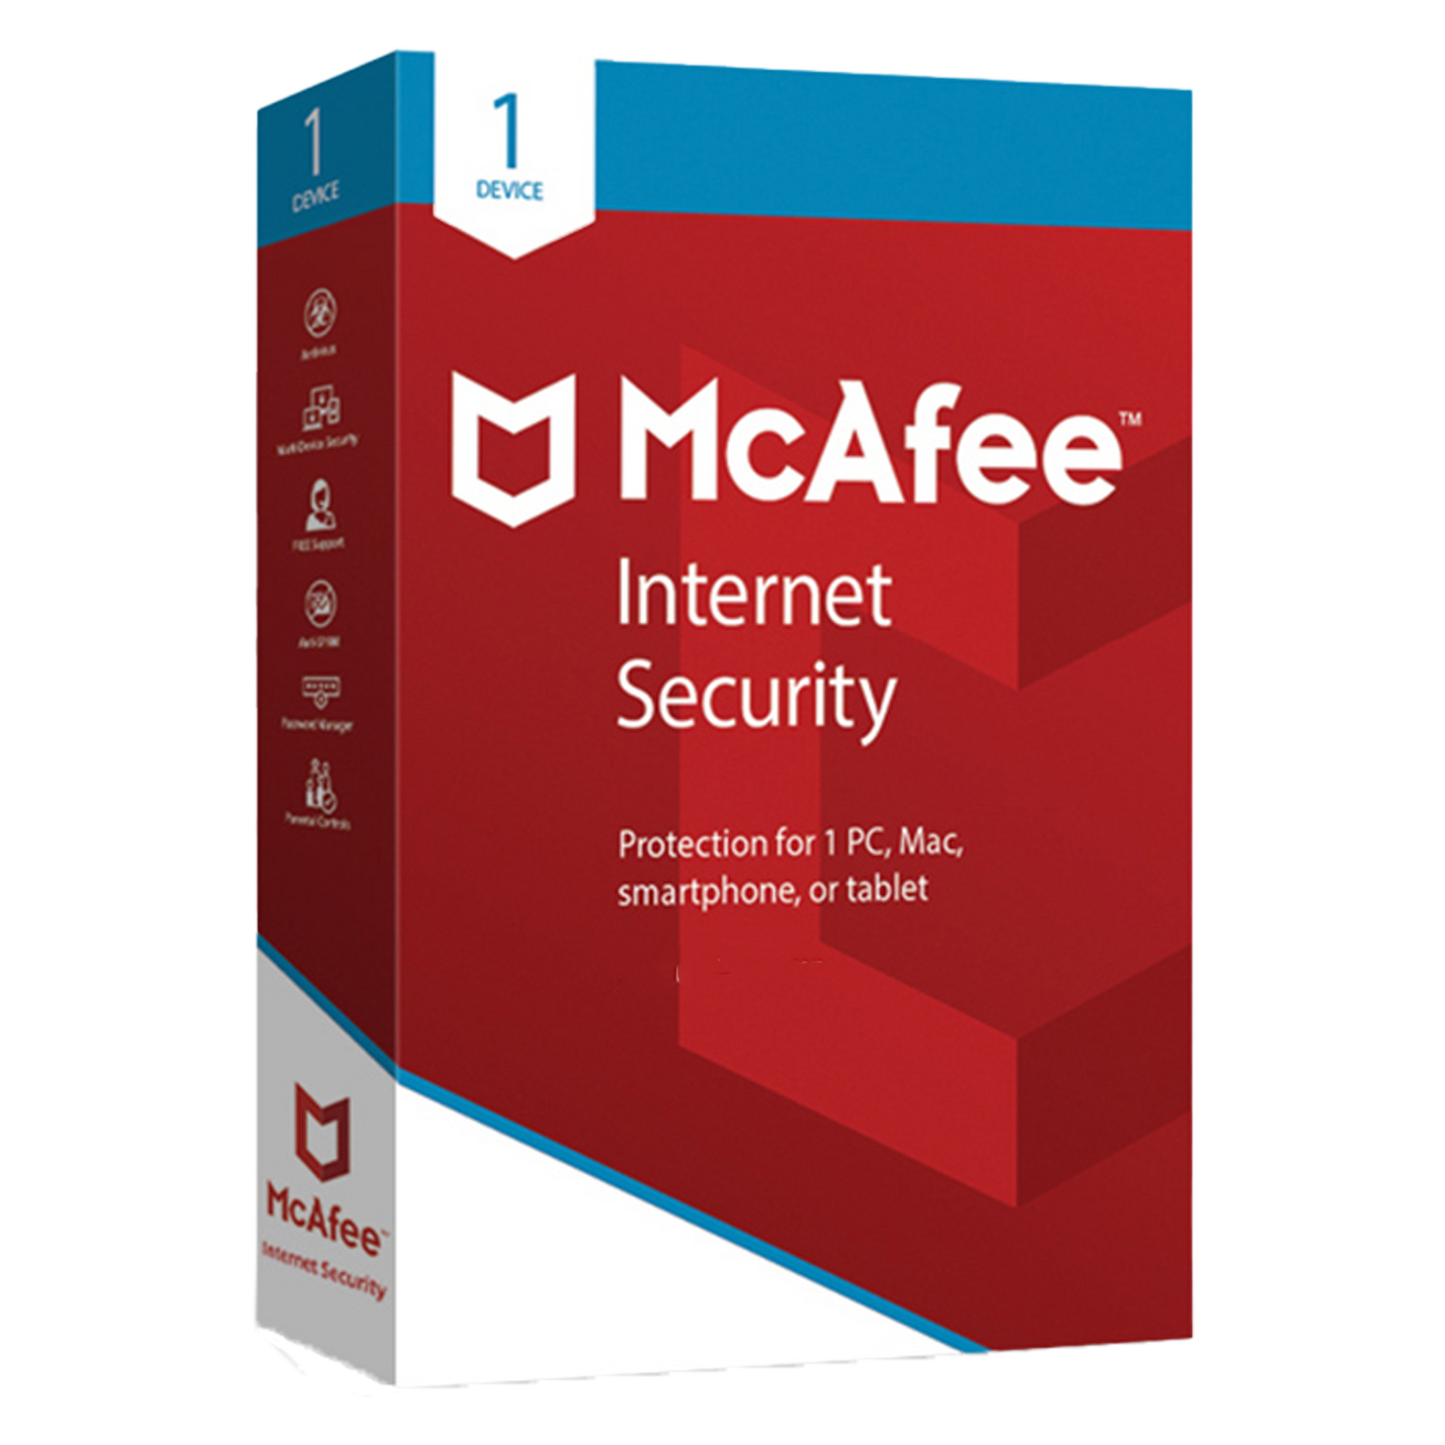 McAfee License Key - 2 Years